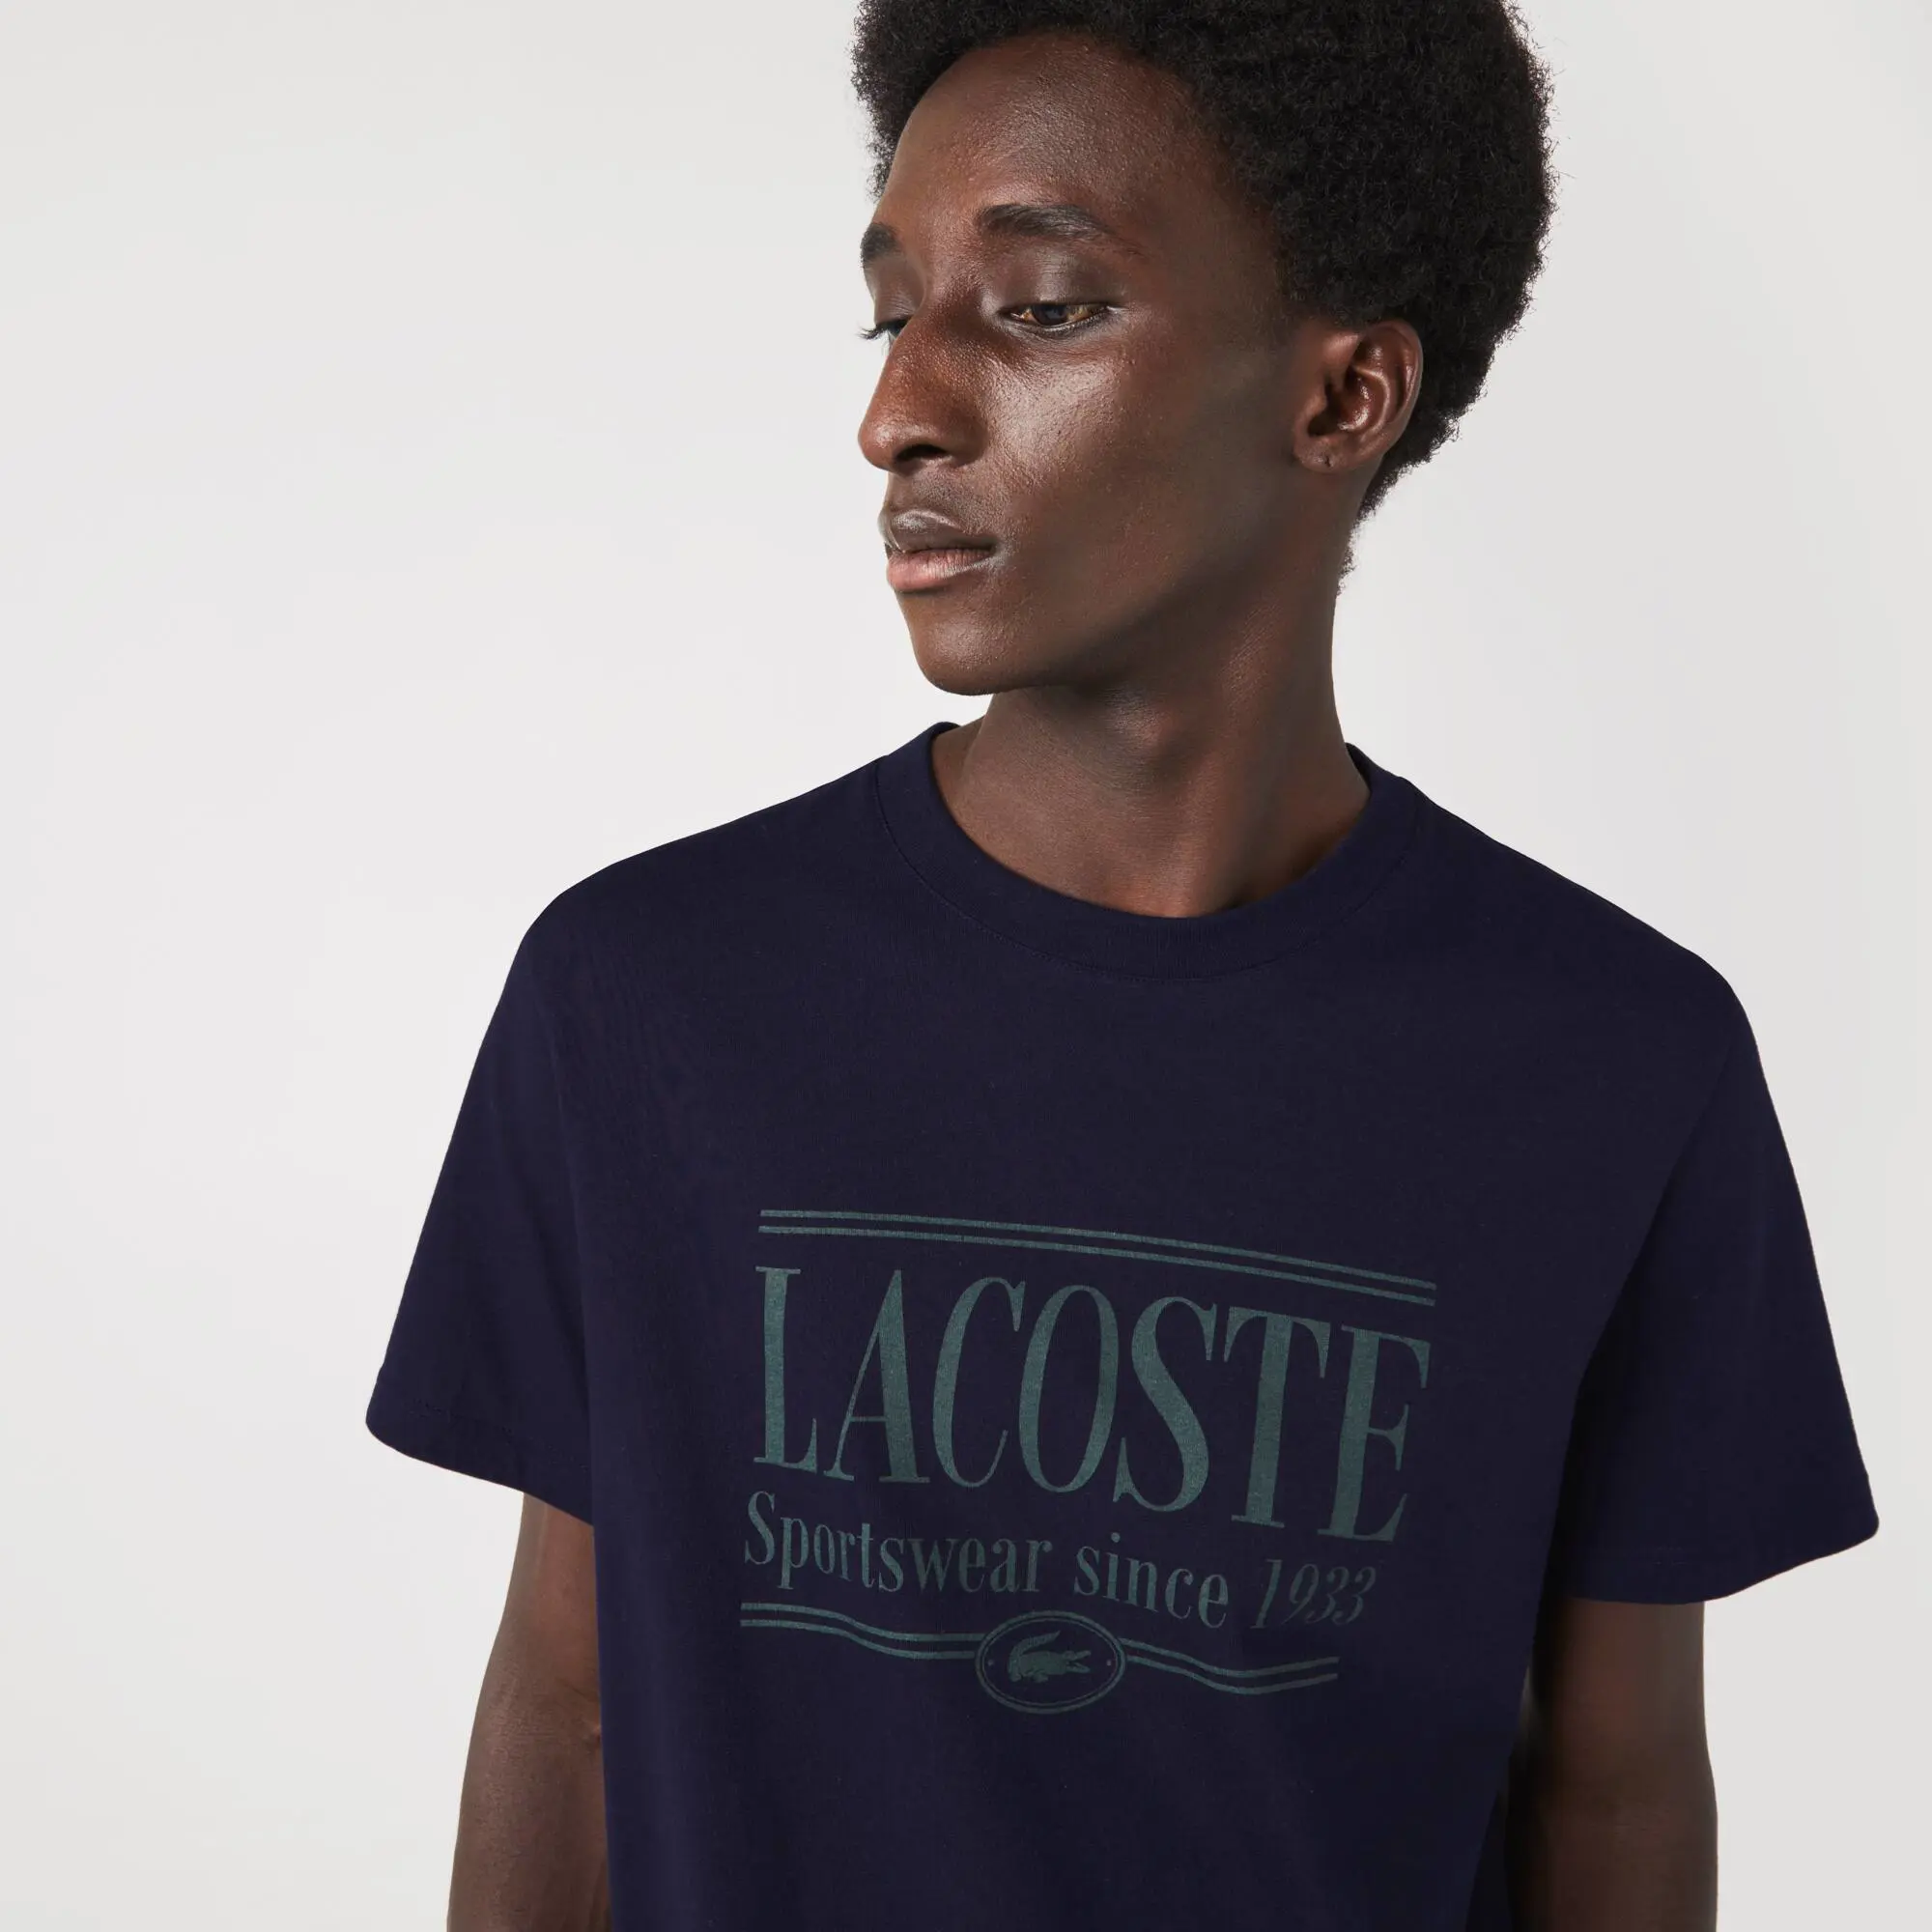 Lacoste T-shirt regular fit em malha Lacoste para homem. 1